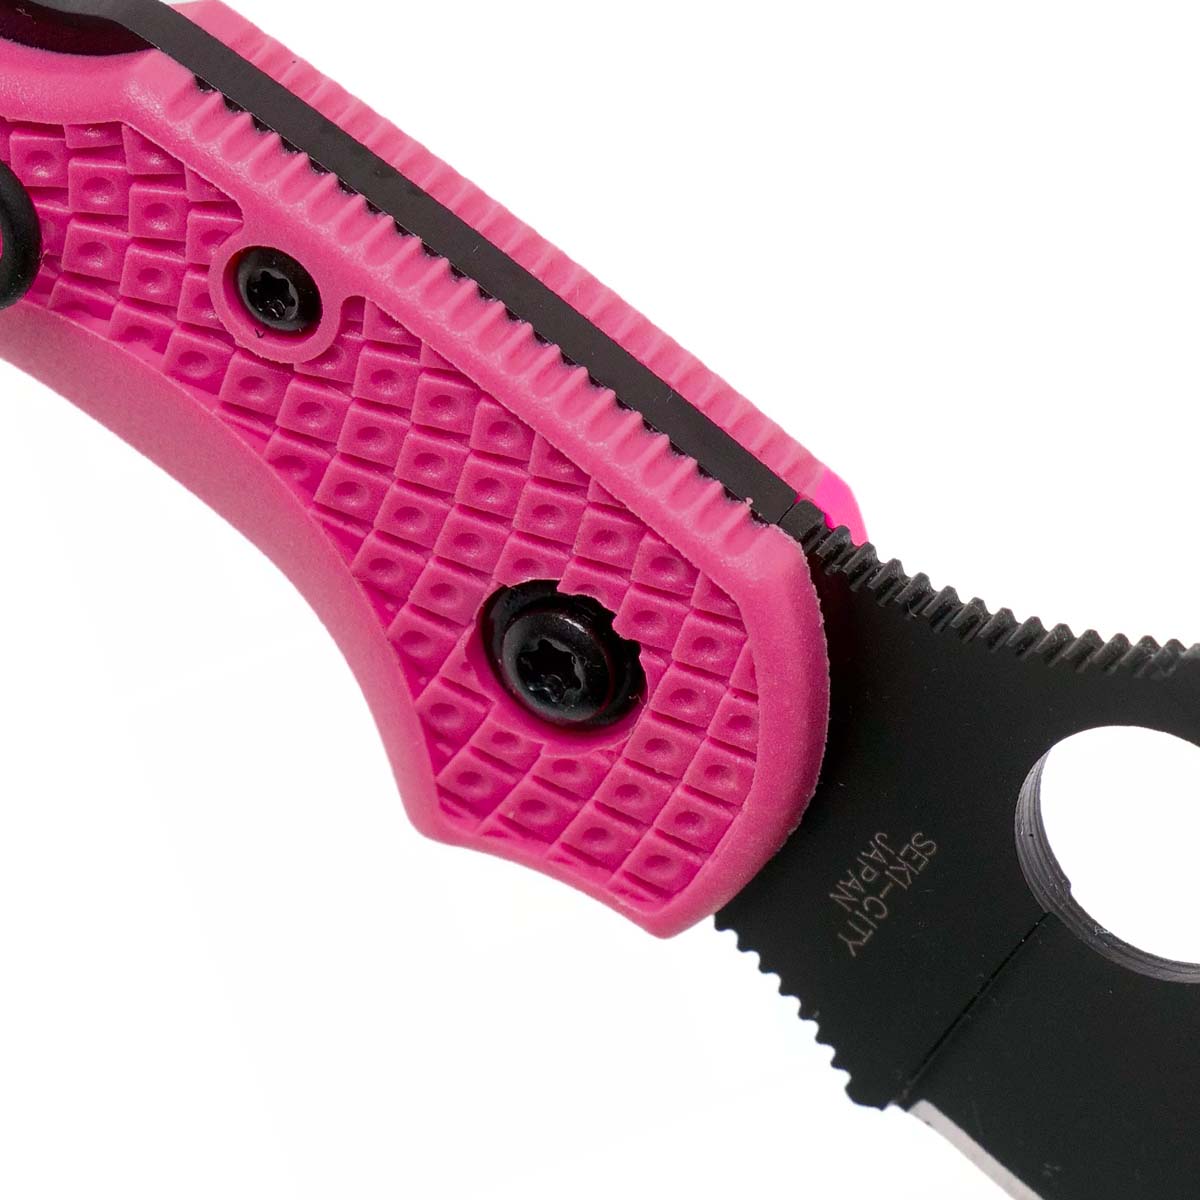 Spyderco Dragonfly 2 Lock-Back Folding Knife - Pink FRN